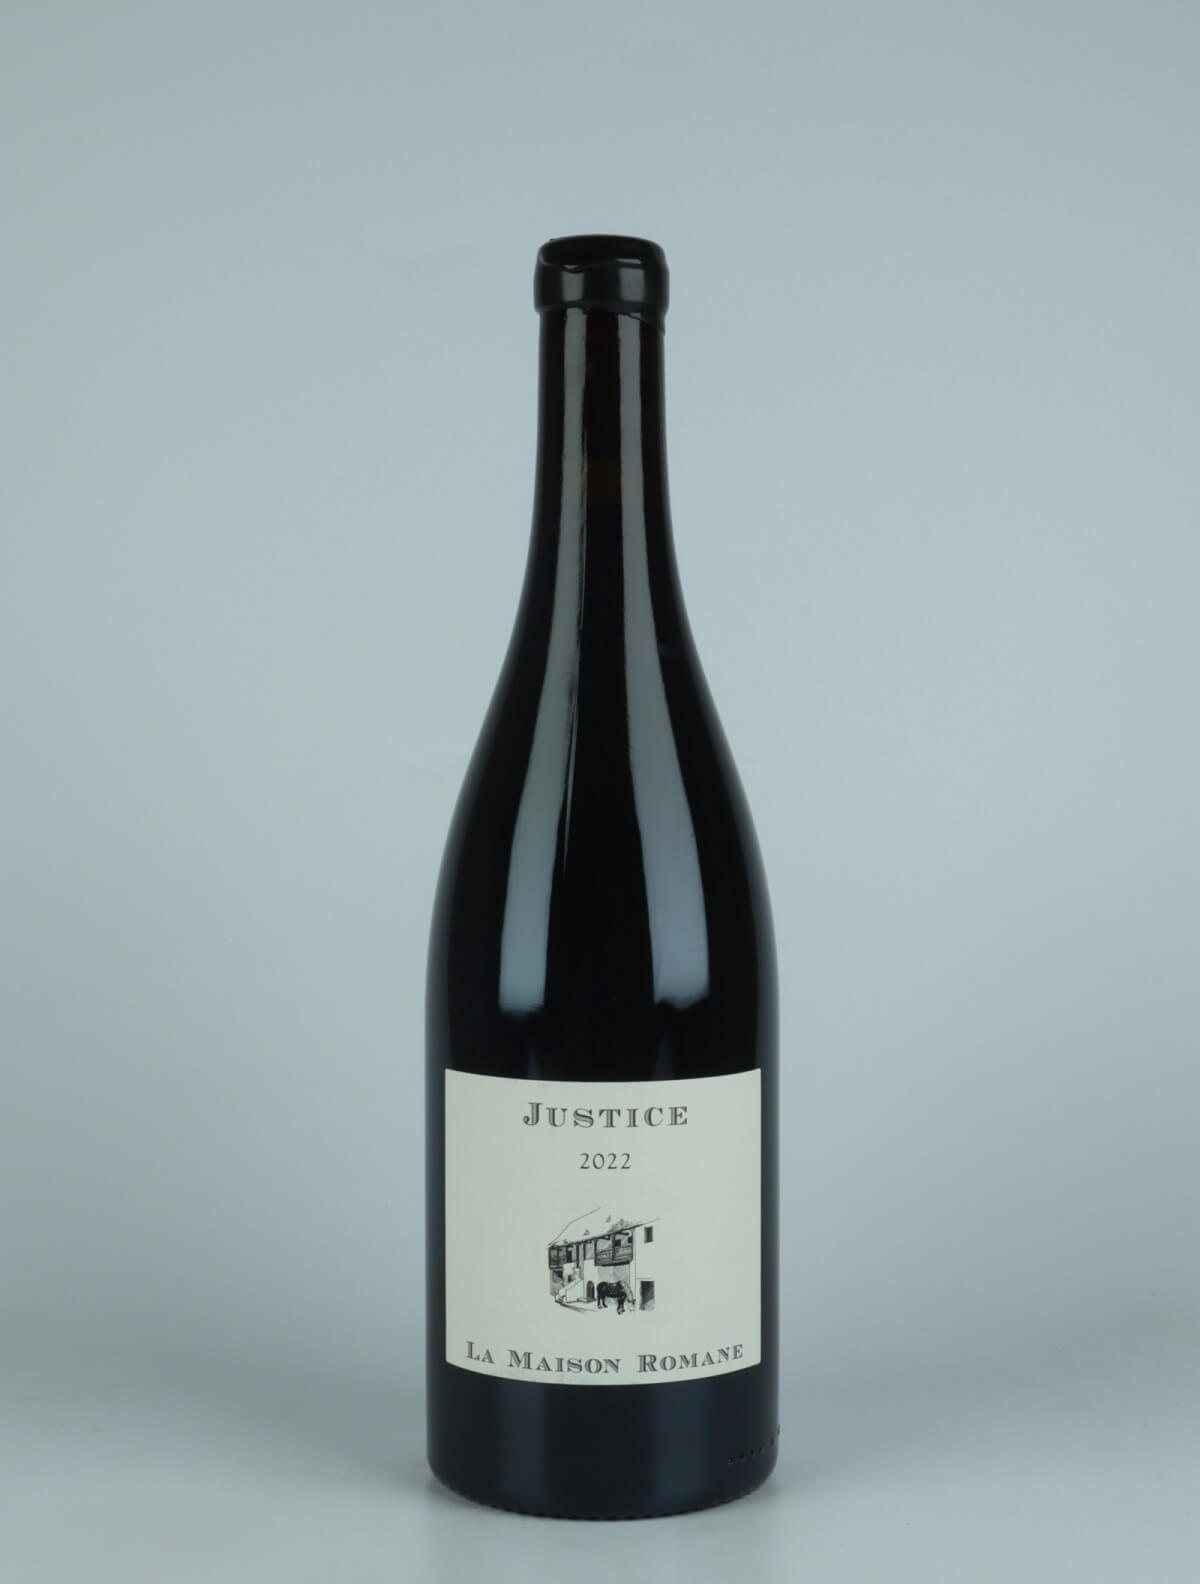 A bottle 2022 Gevrey Chambertin - La Justice Red wine from La Maison Romane, Burgundy in France